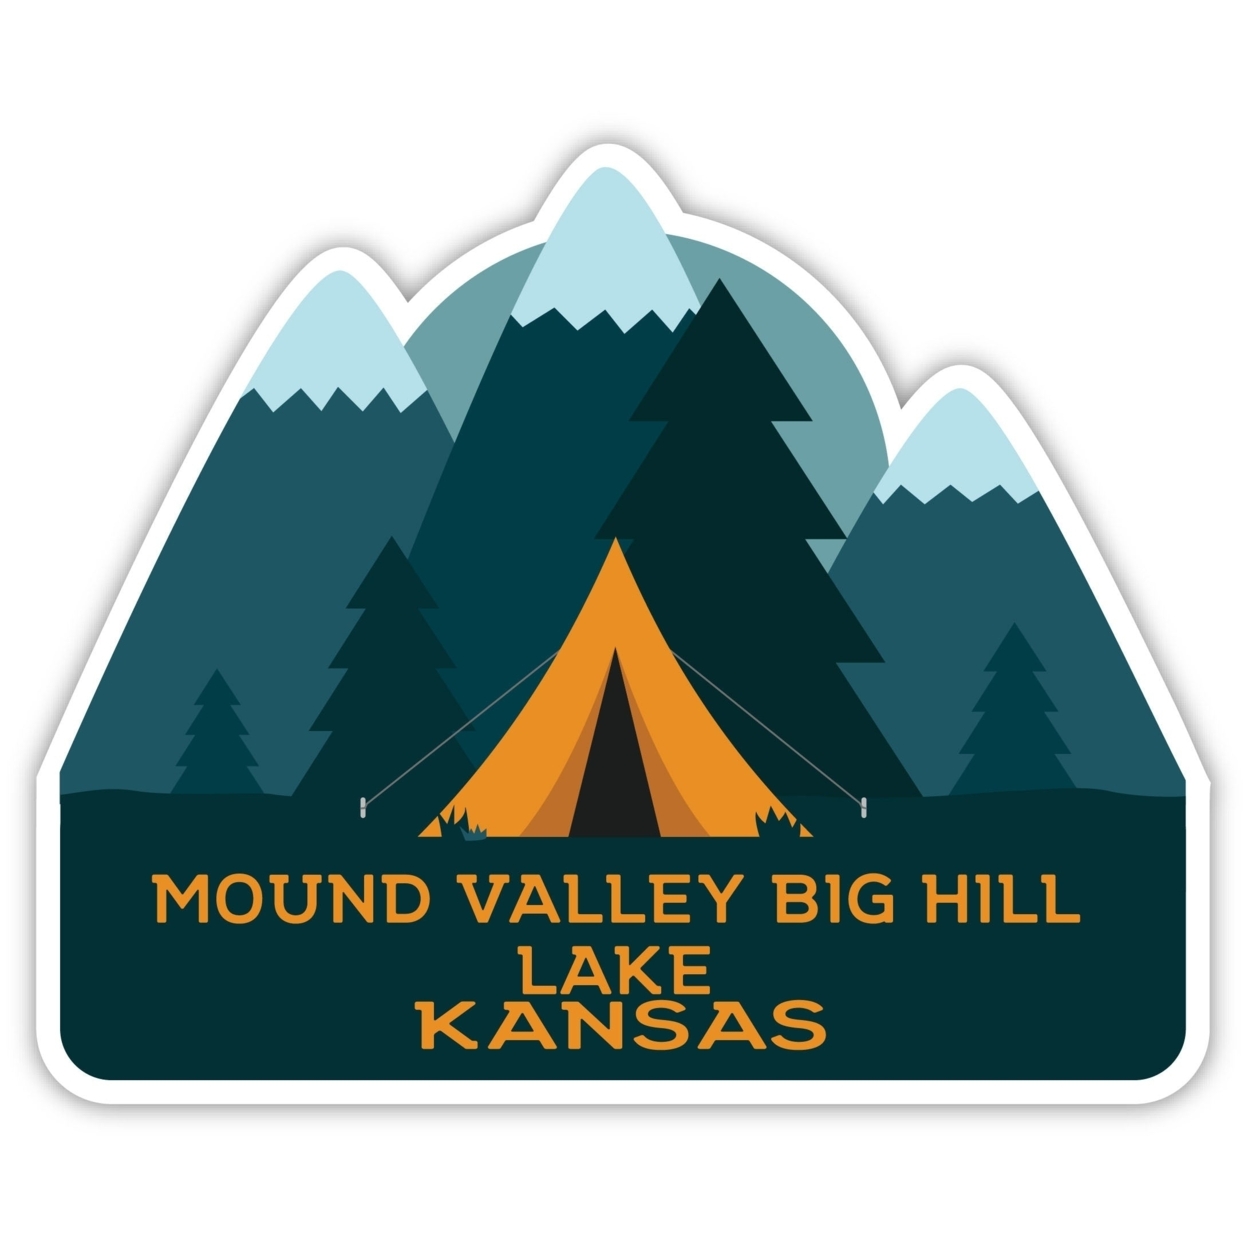 Mound Valley Big Hill Lake Kansas Souvenir Decorative Stickers (Choose Theme And Size) - Single Unit, 4-Inch, Tent